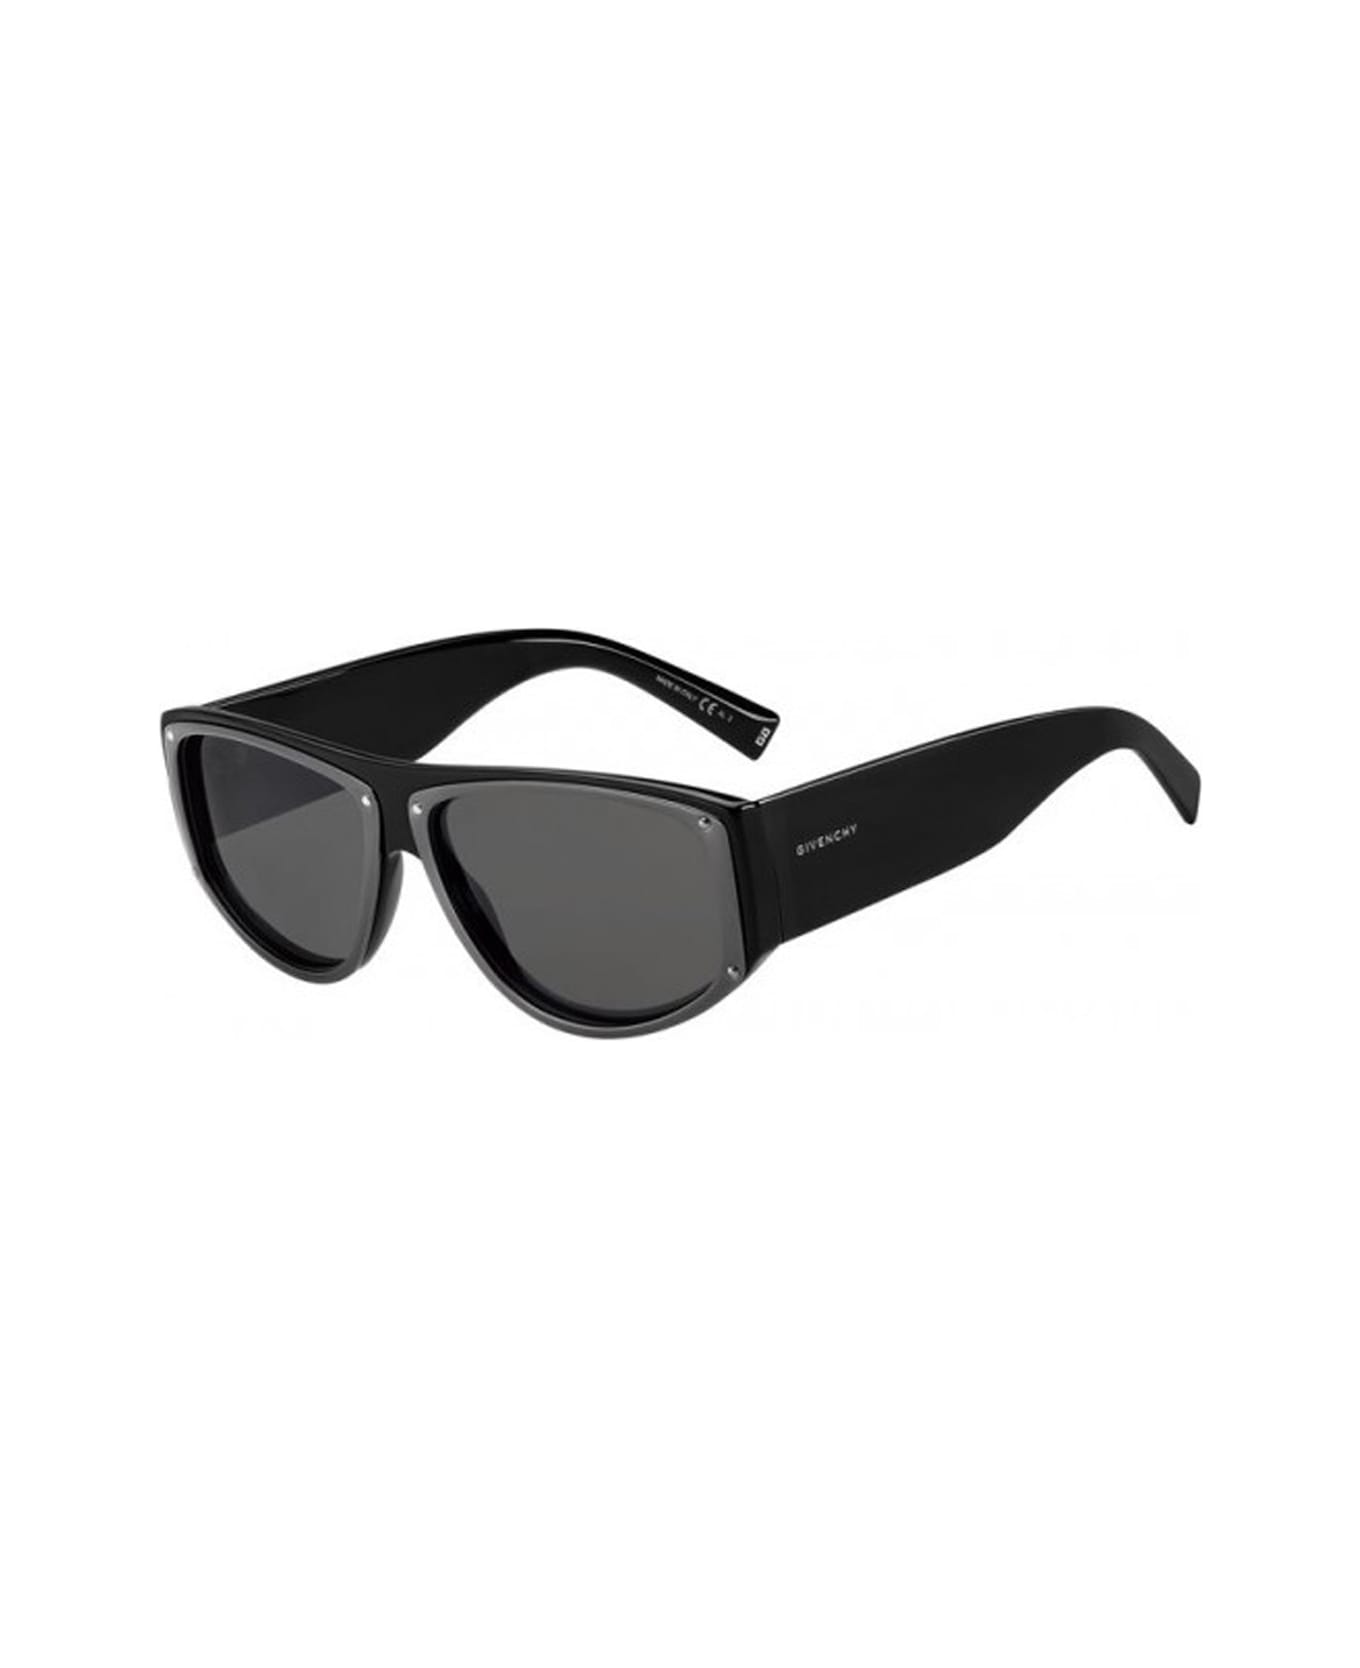 Givenchy Eyewear Gv 7177/s Sunglasses - Nero サングラス